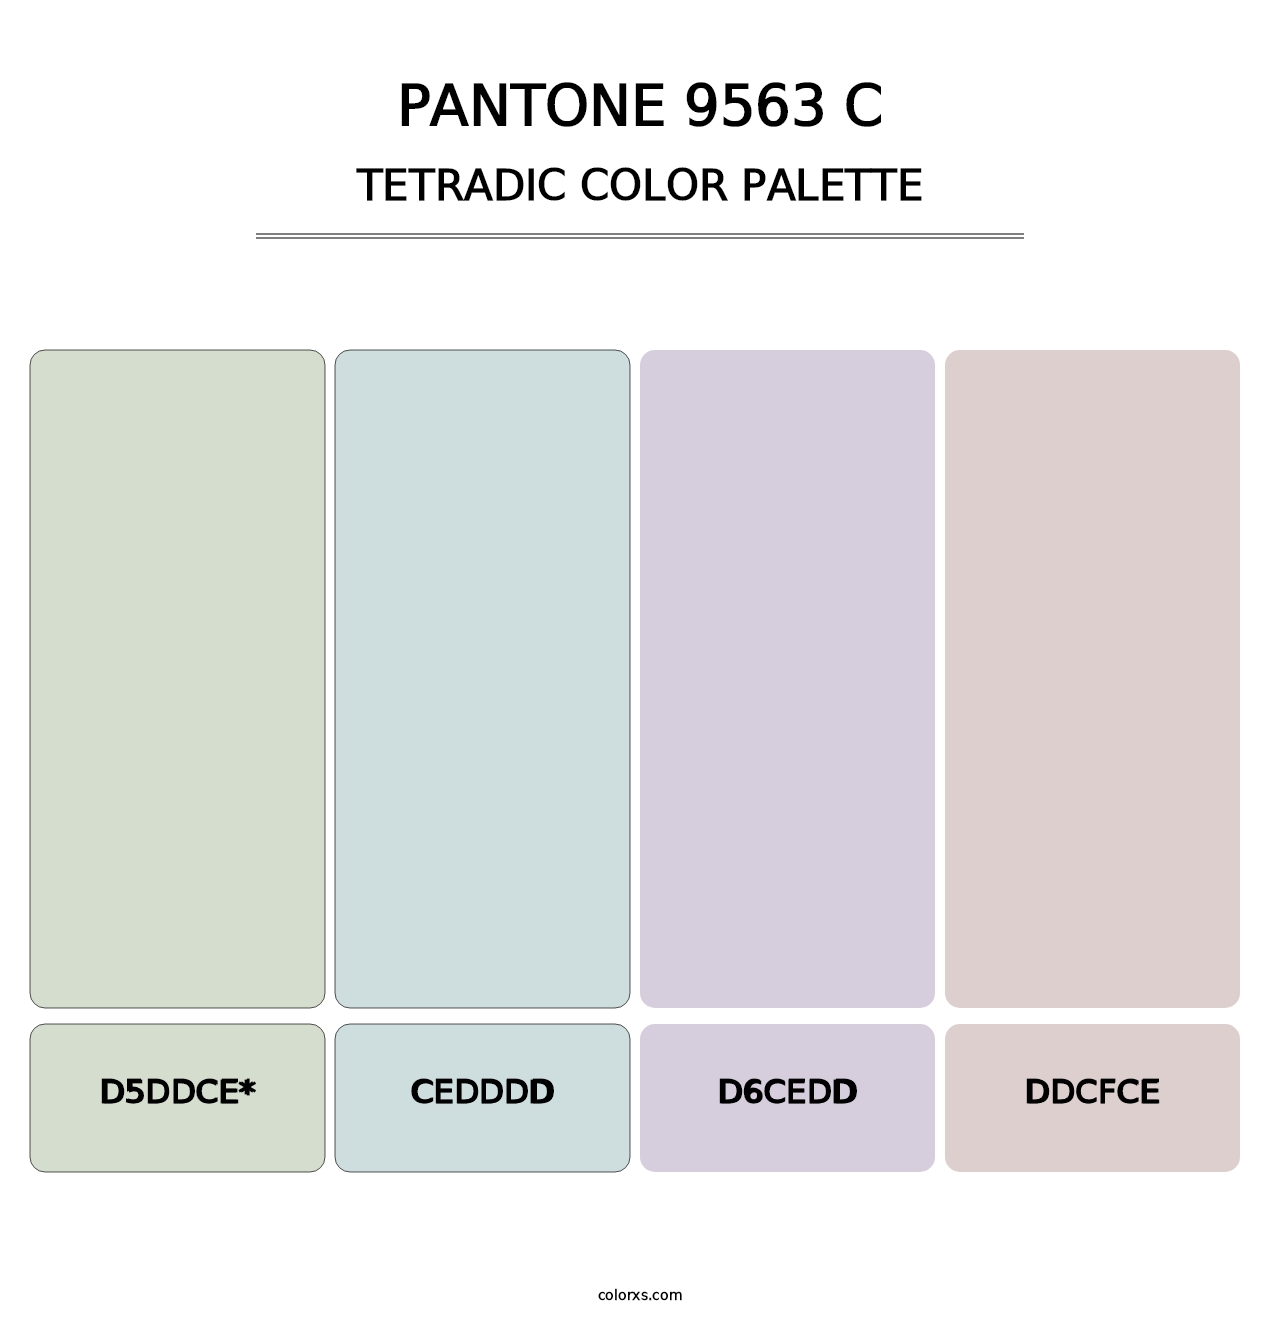 PANTONE 9563 C - Tetradic Color Palette